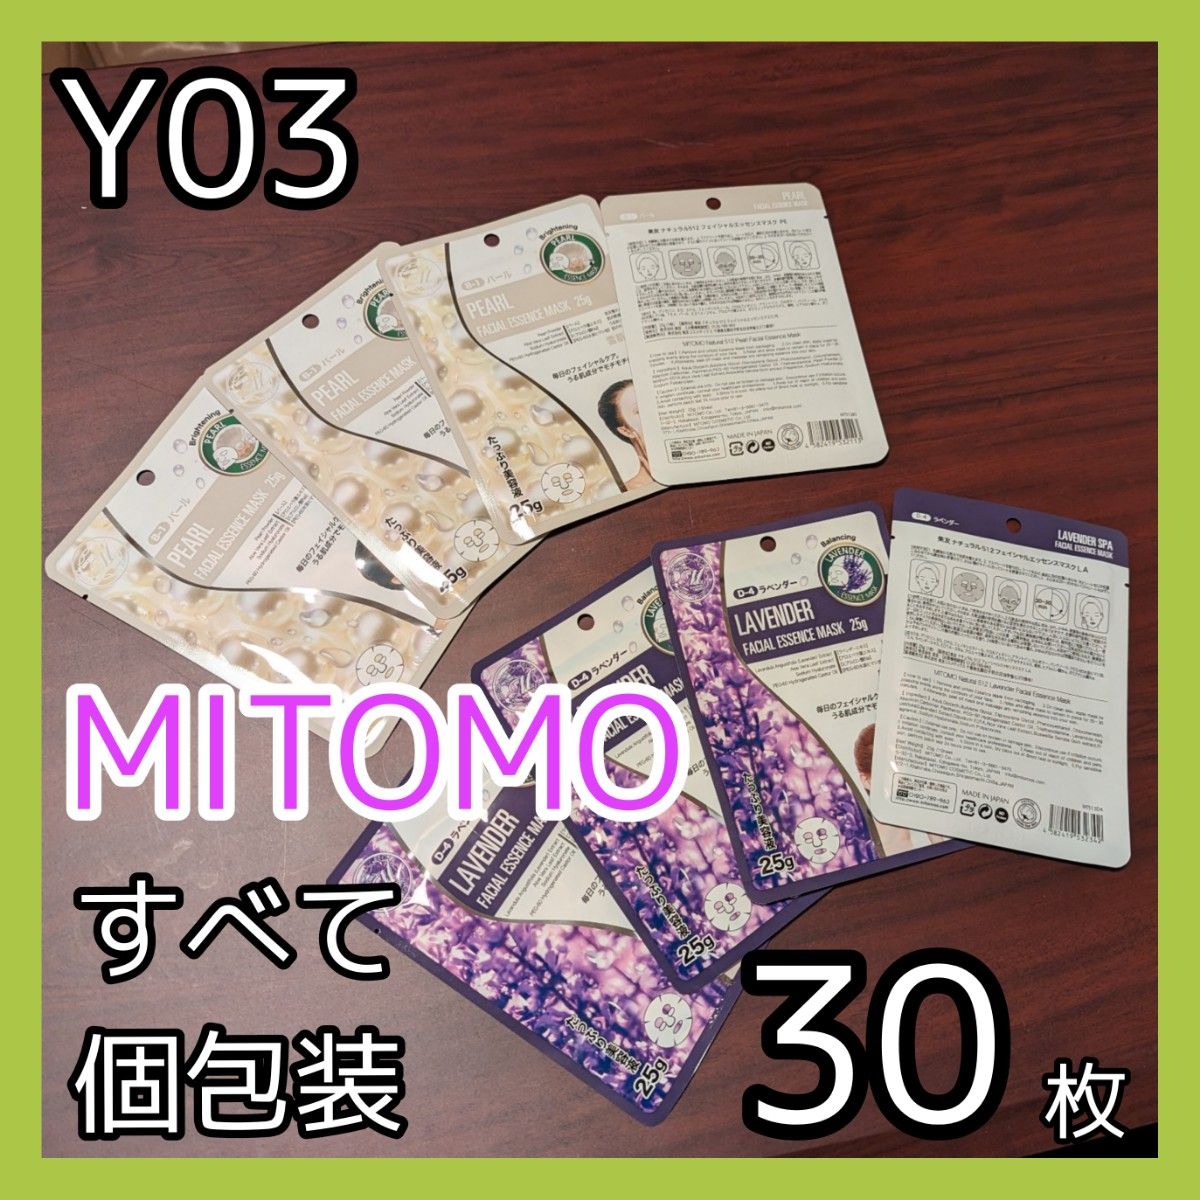 [Y03]【30枚/2種】ミトモ フェイスシート マスク パック まとめ売り MITOMO 美友 個包装パック